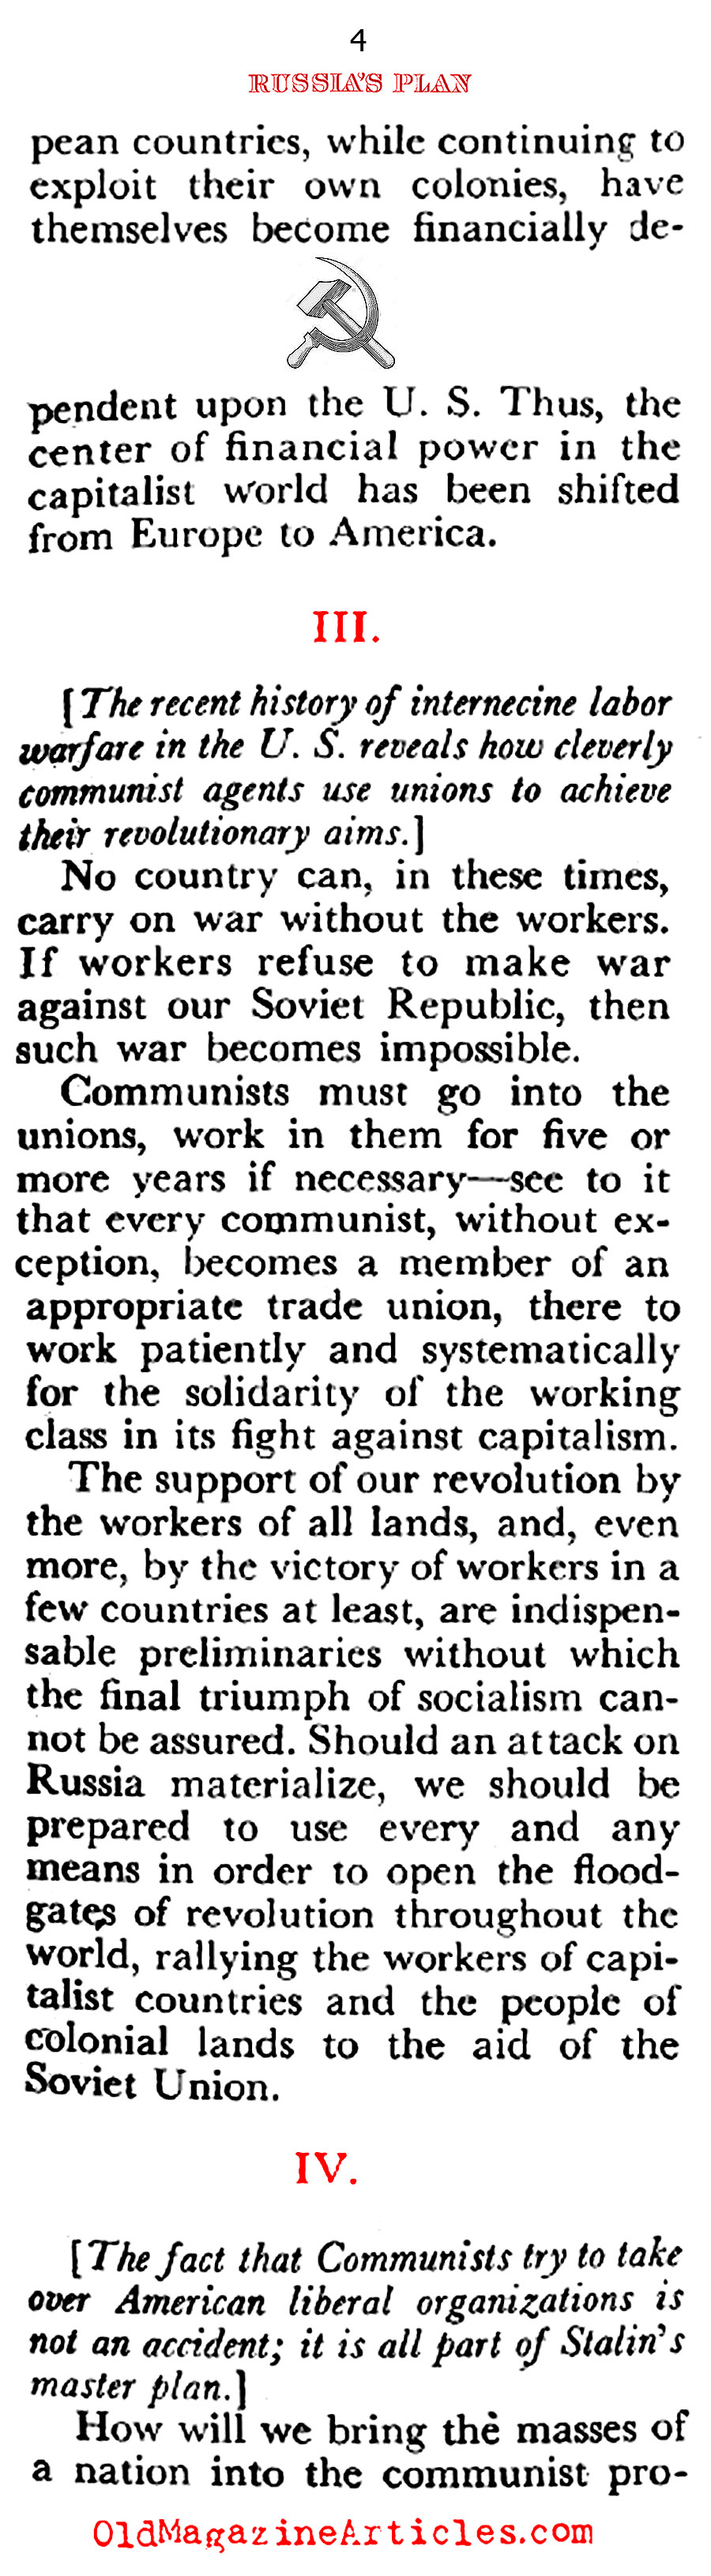 Stalin's Nine Point Plan (Coronet Magazine, 1951)